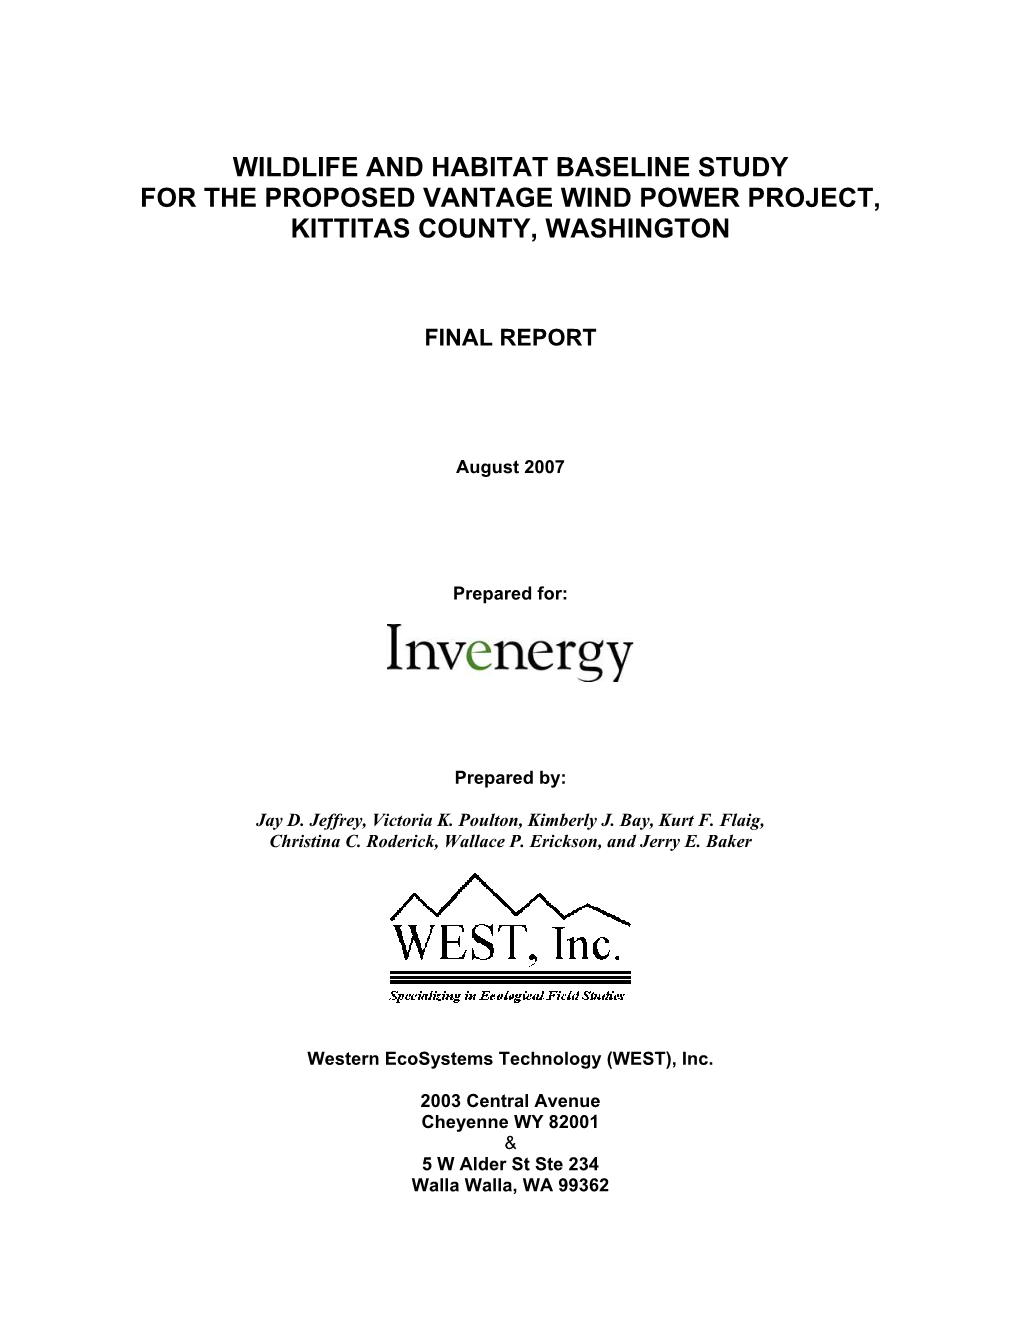 Wildlife and Habitat Baseline Study for the Proposed Vantage Wind Power Project, Kittitas County, Washington